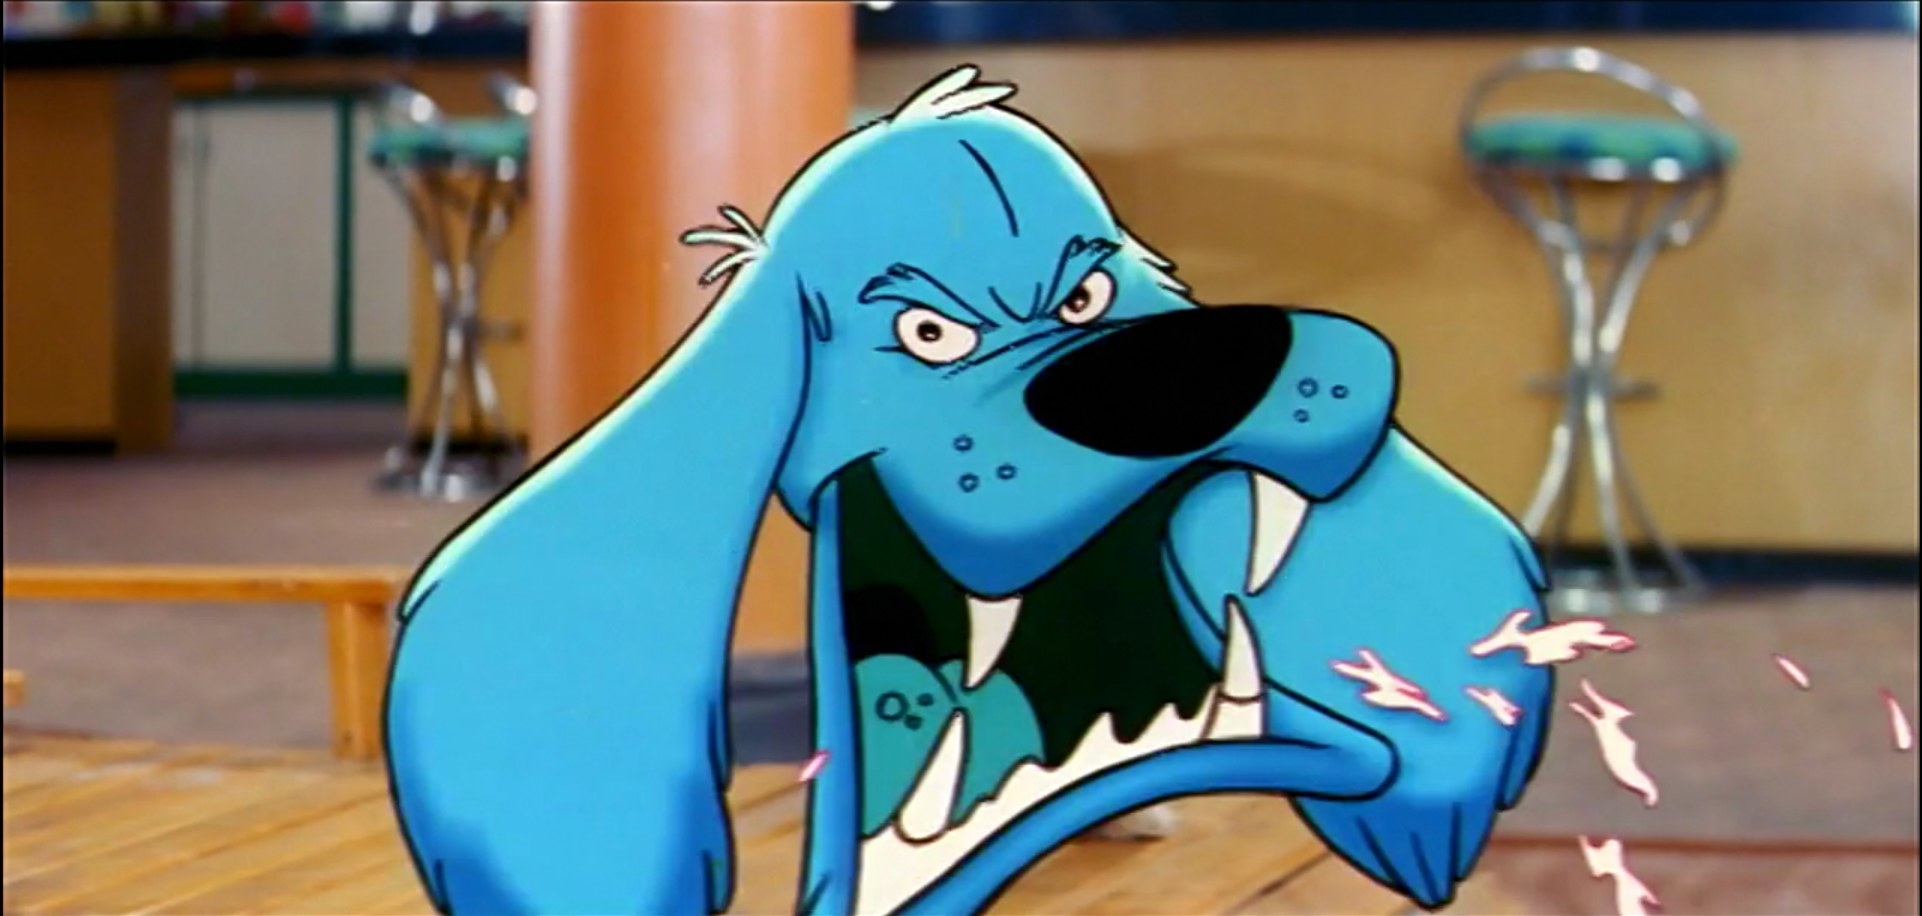 A cocker spaniel with a blue CGI face